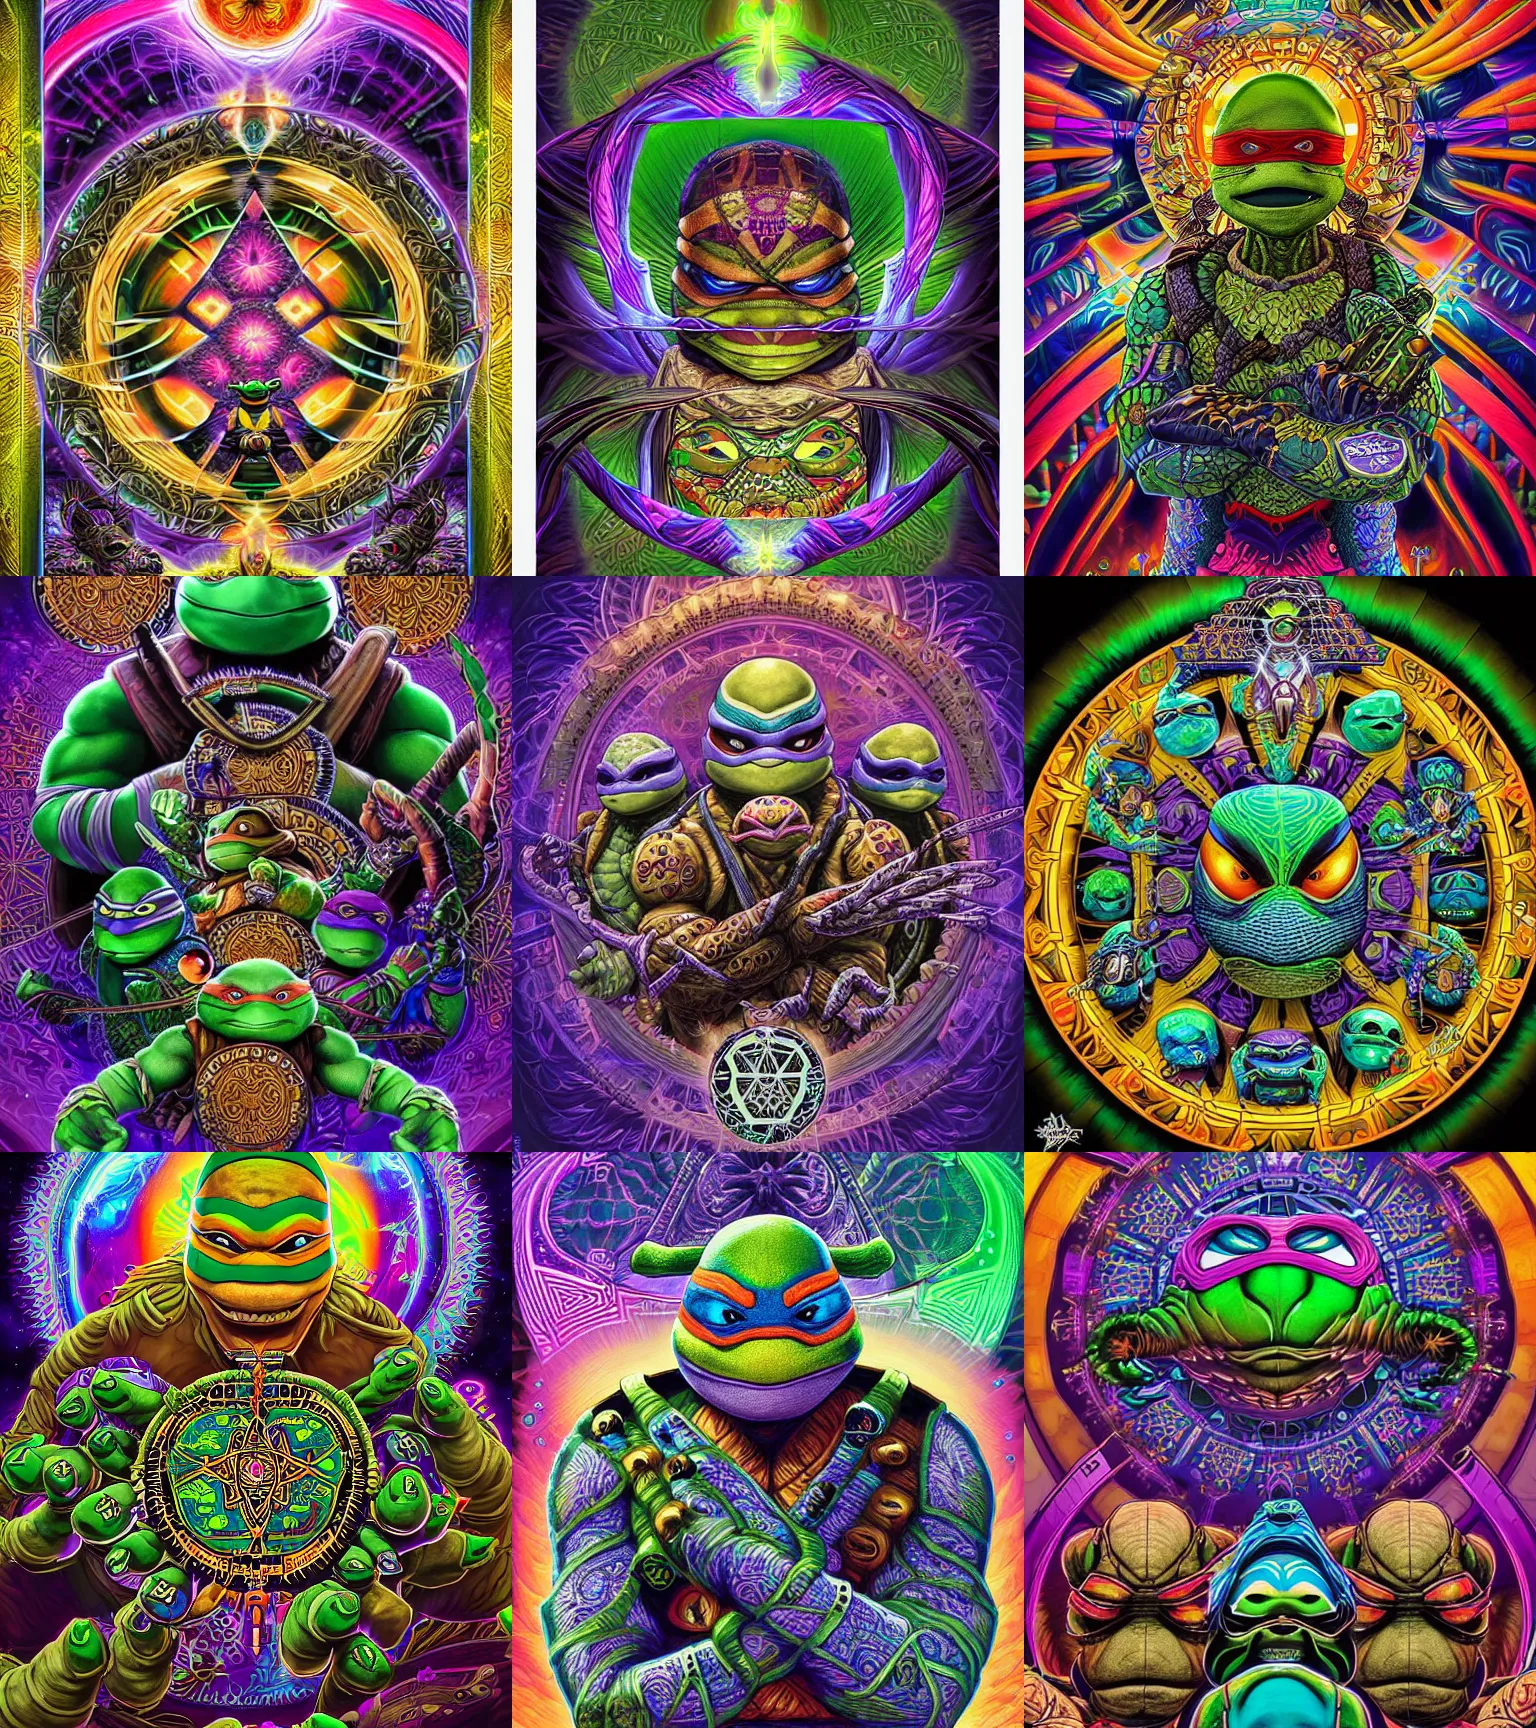 Prompt: a beautiful digital art of a intricate ornate cosmic fractal teenage mutant ninja turtles shaman with a glowing third eye by dan mumford and alex grey, sacred geometry, hd vibrant, hyper detailed, 3 d, ue 5, ultra fine detailed